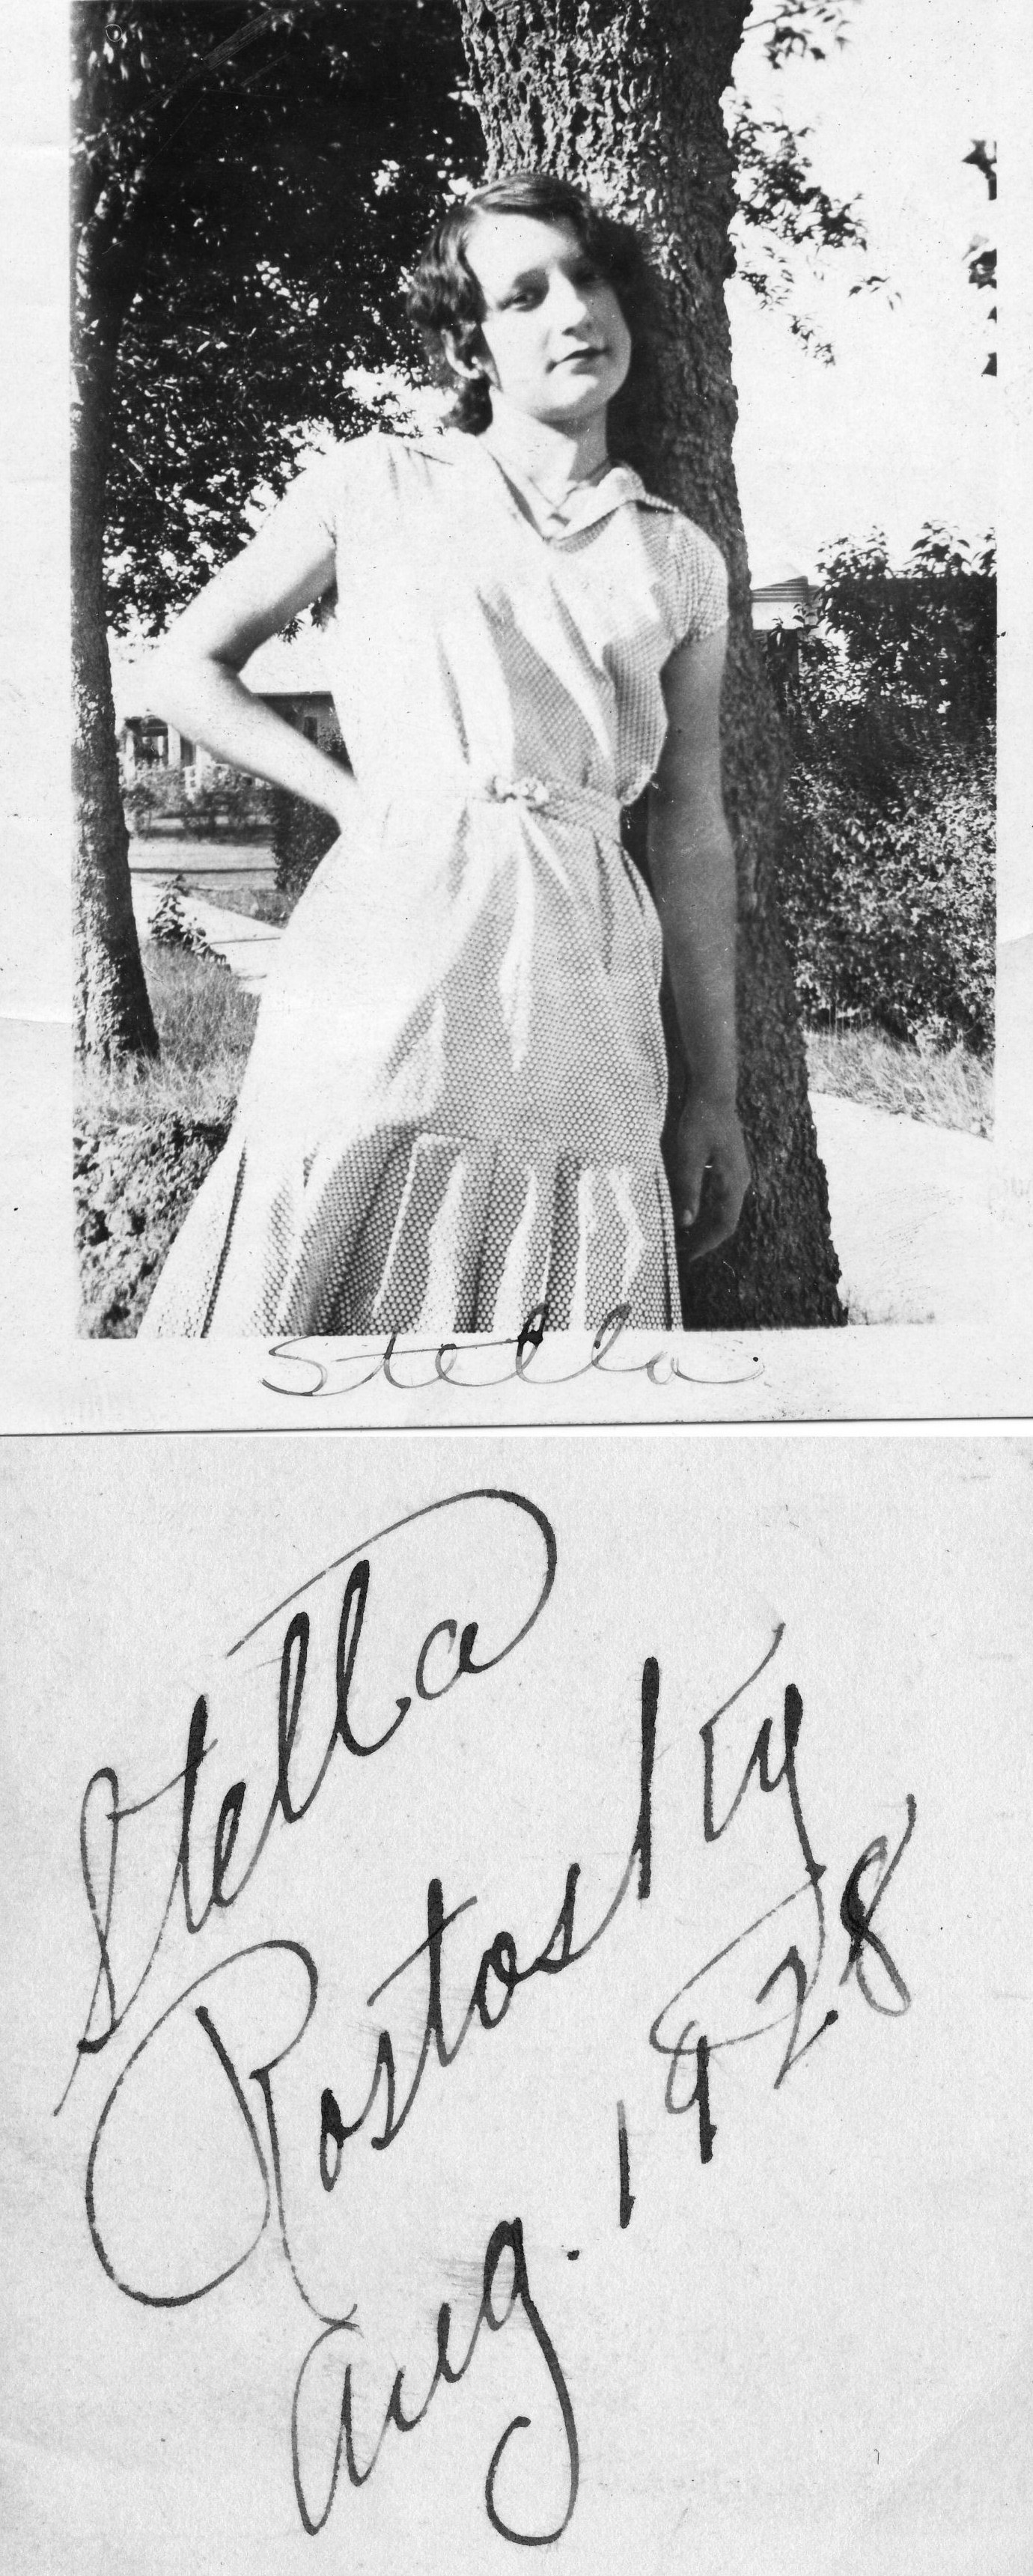 Stella Rostosky - August 1928